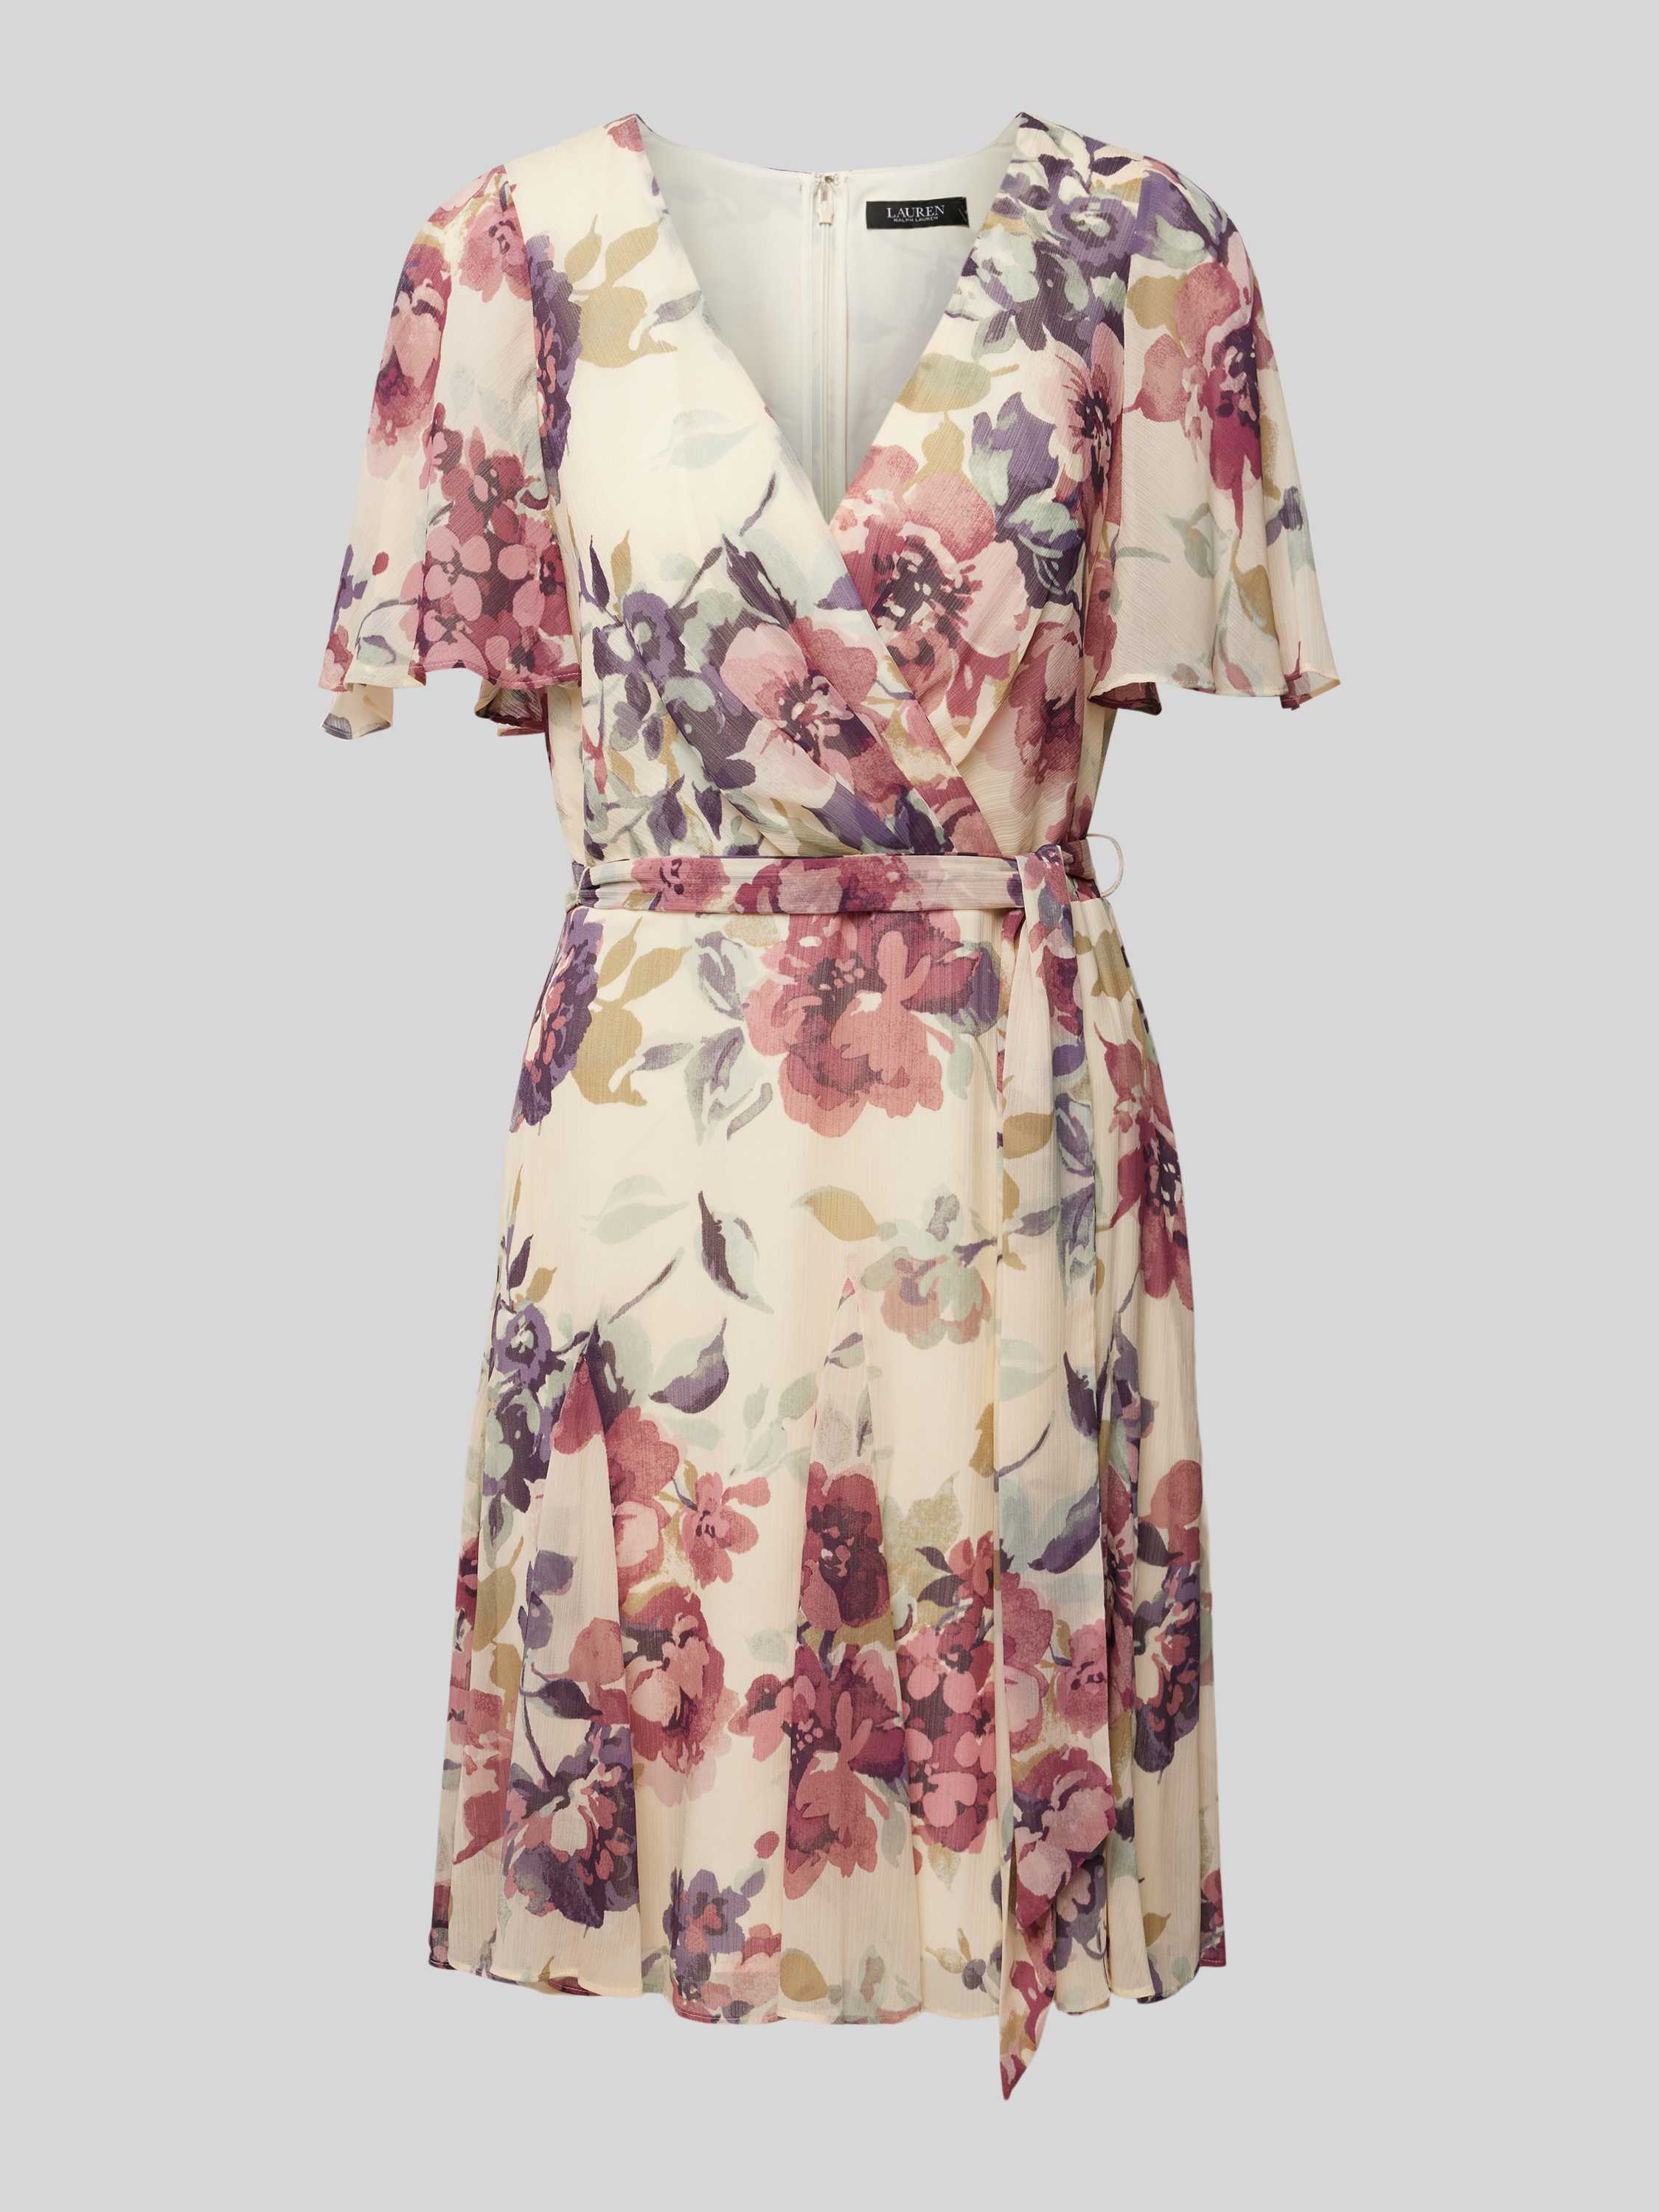 Knielanges Kleid mit floralem Print Modell 'WANDELLA'